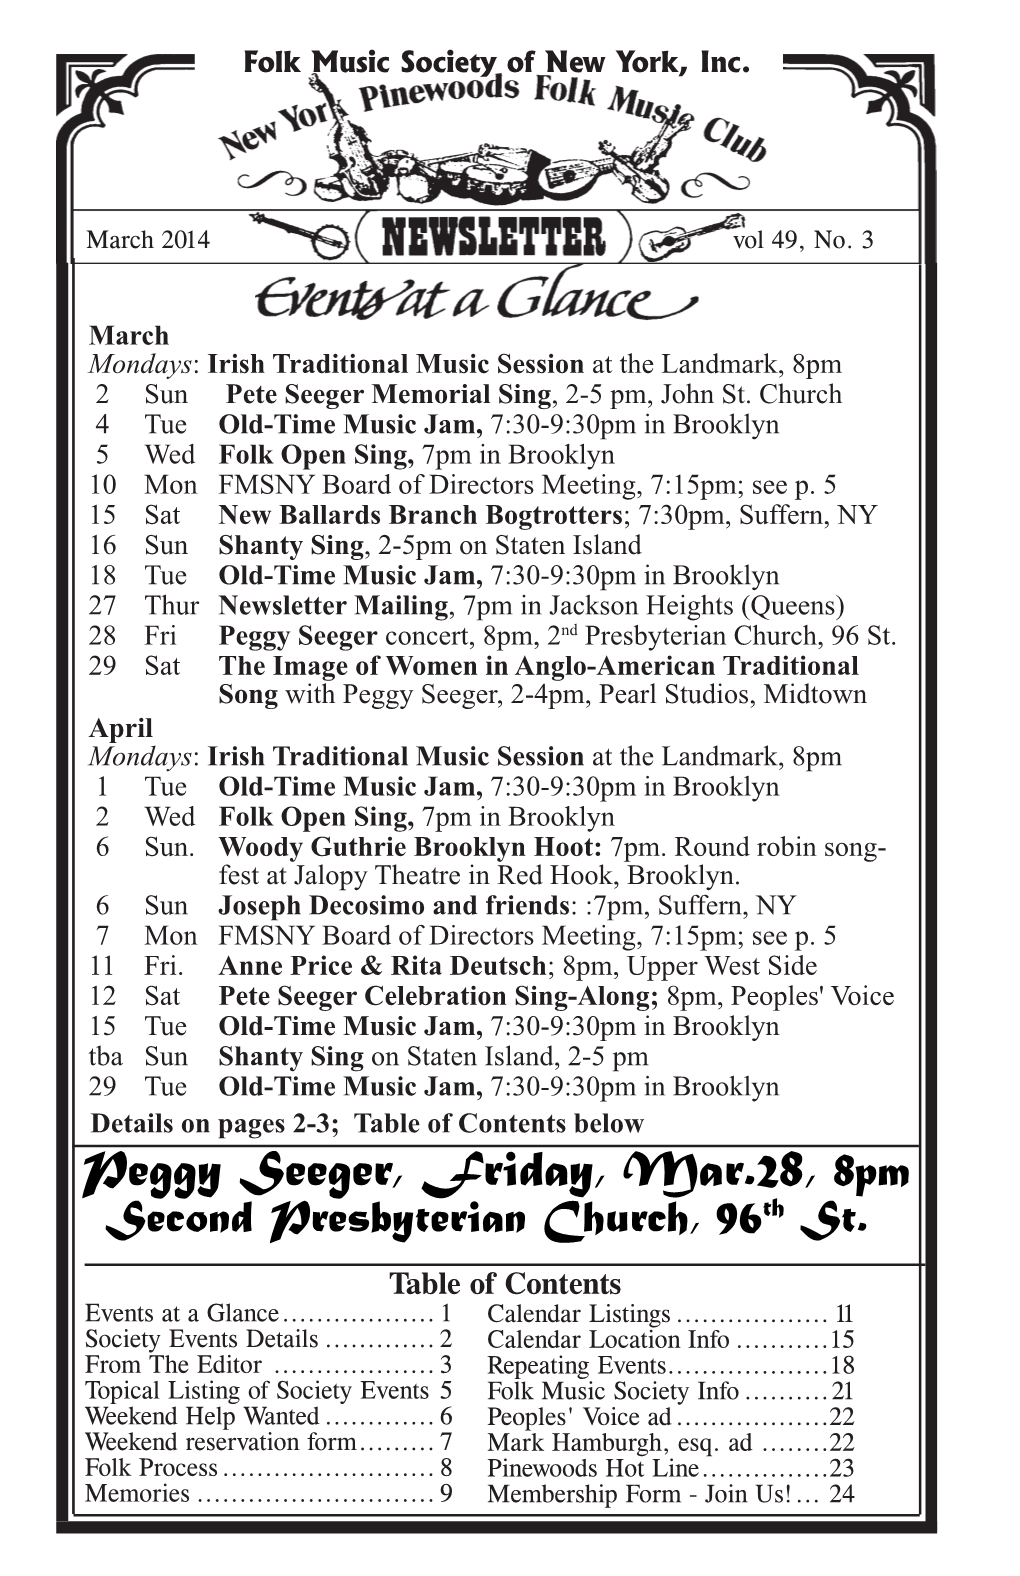 Peggy Seeger, Friday, Mar.28, 8Pm Second Presbyterian Church, 96Th St